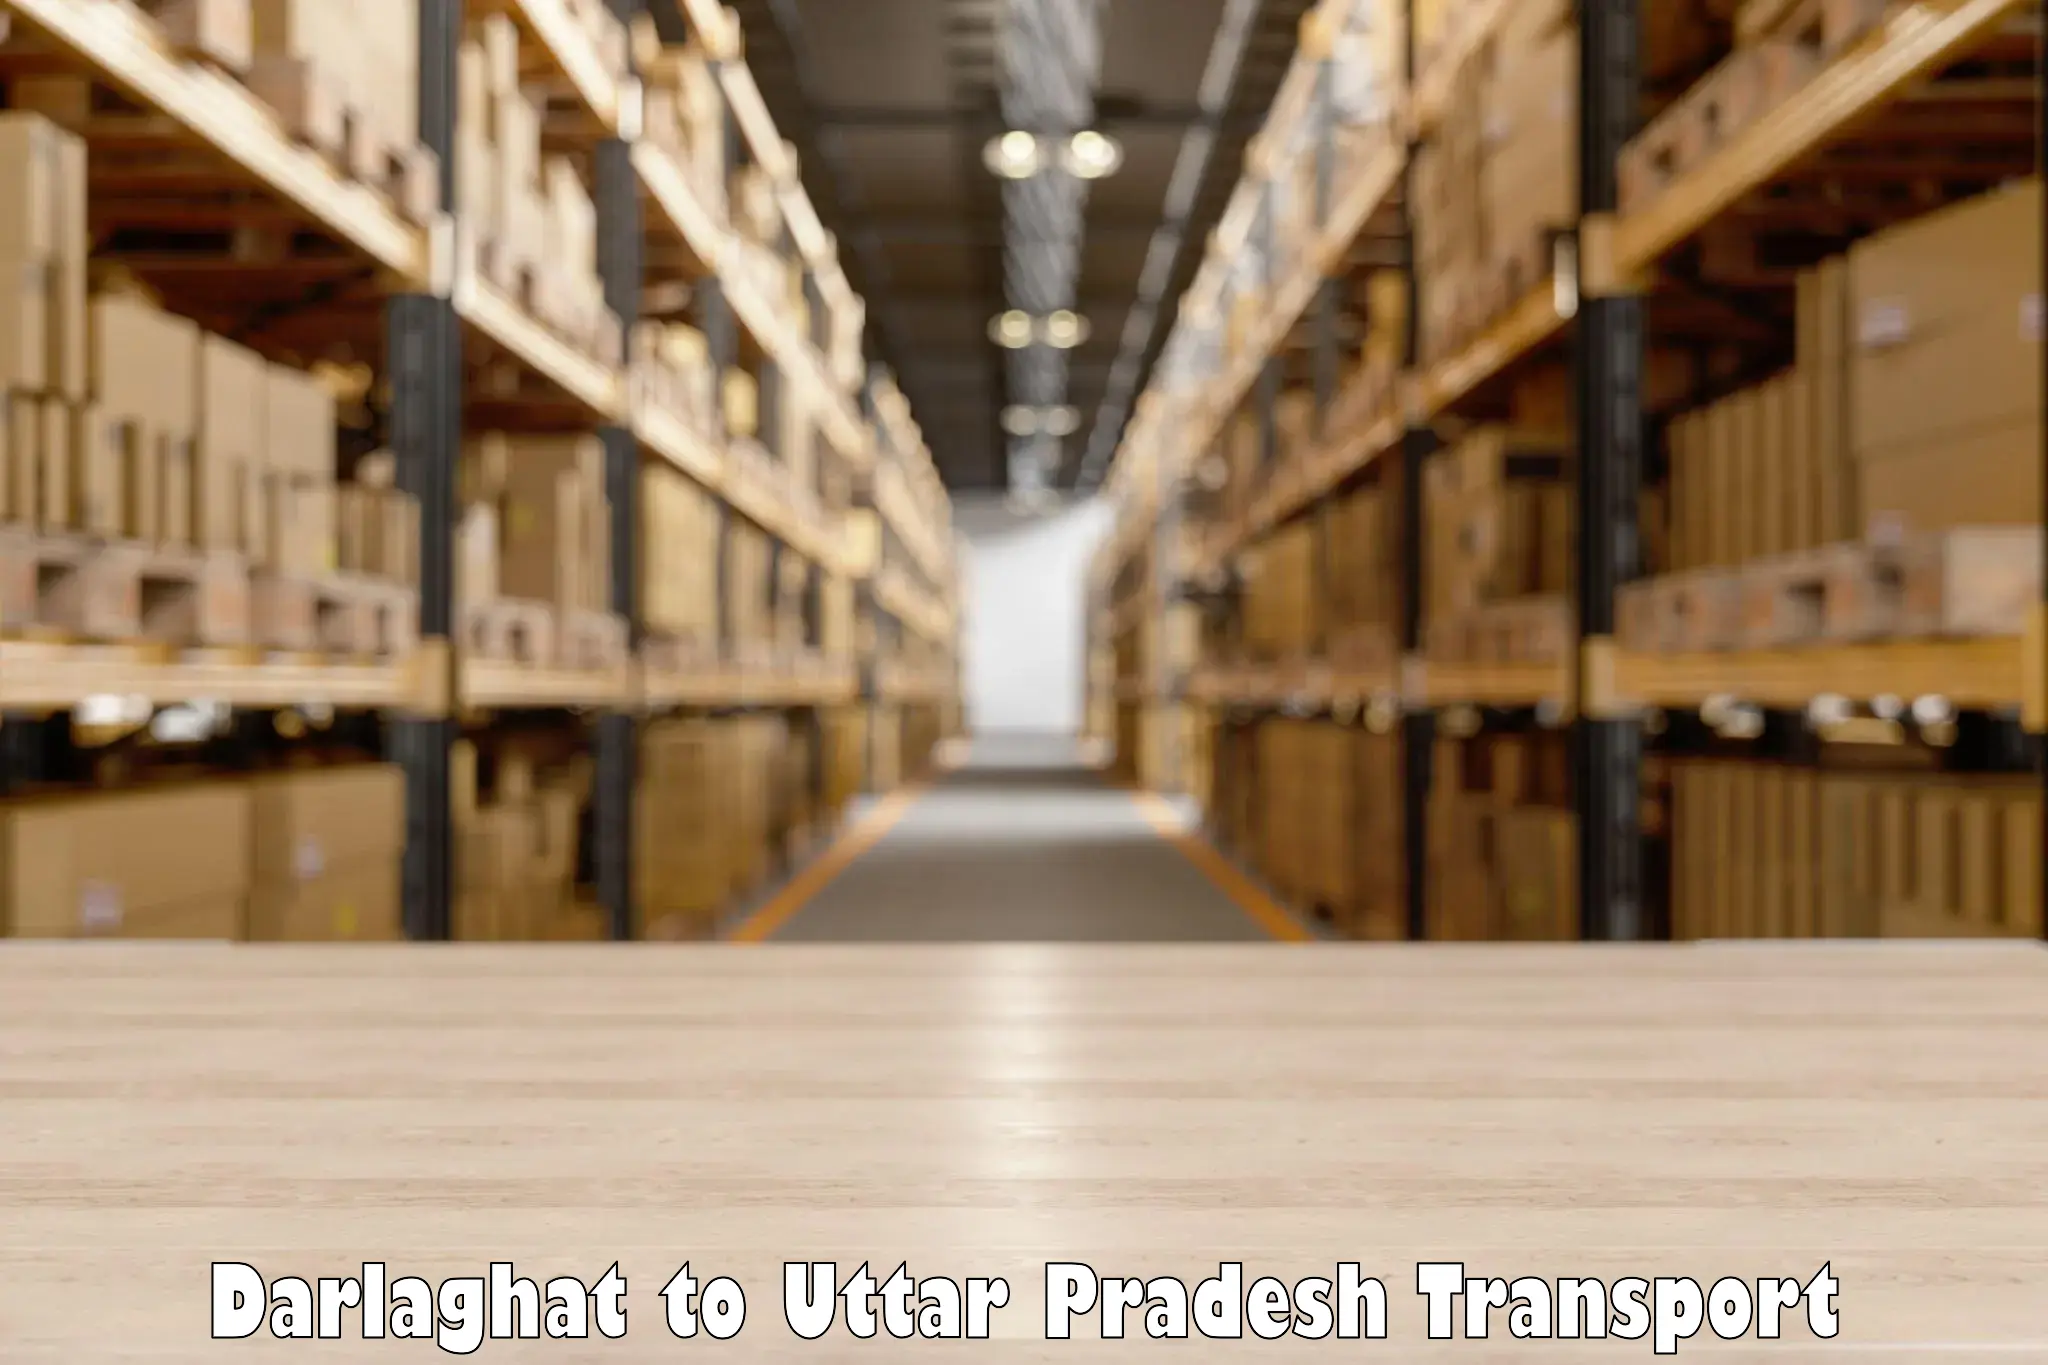 Shipping partner Darlaghat to Uttar Pradesh